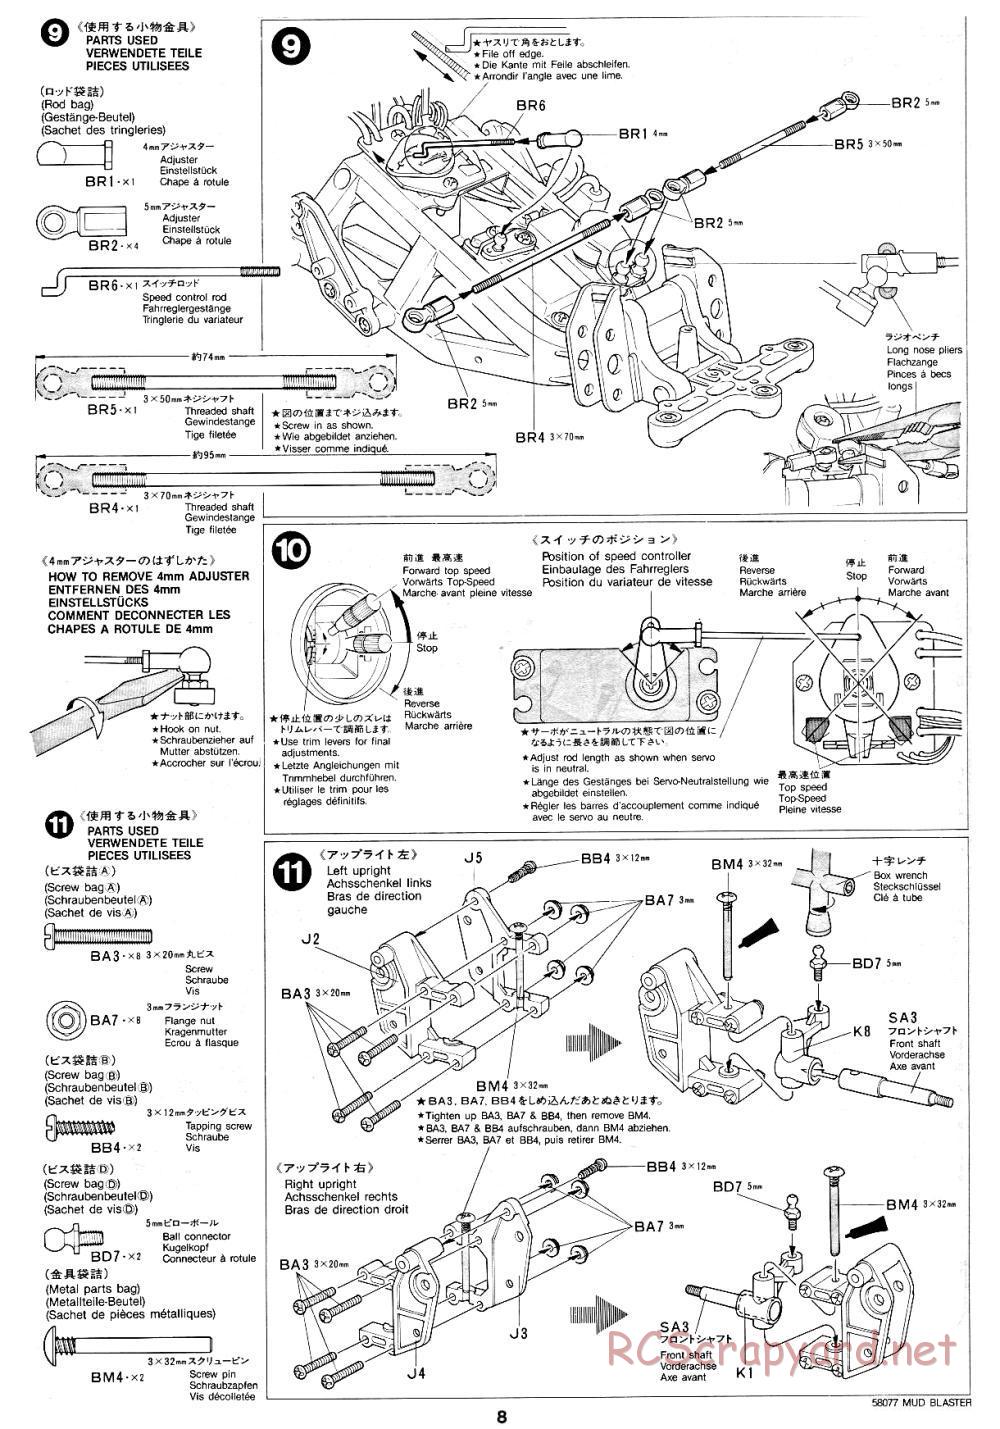 Tamiya - Mud Blaster - 58077 - Manual - Page 8